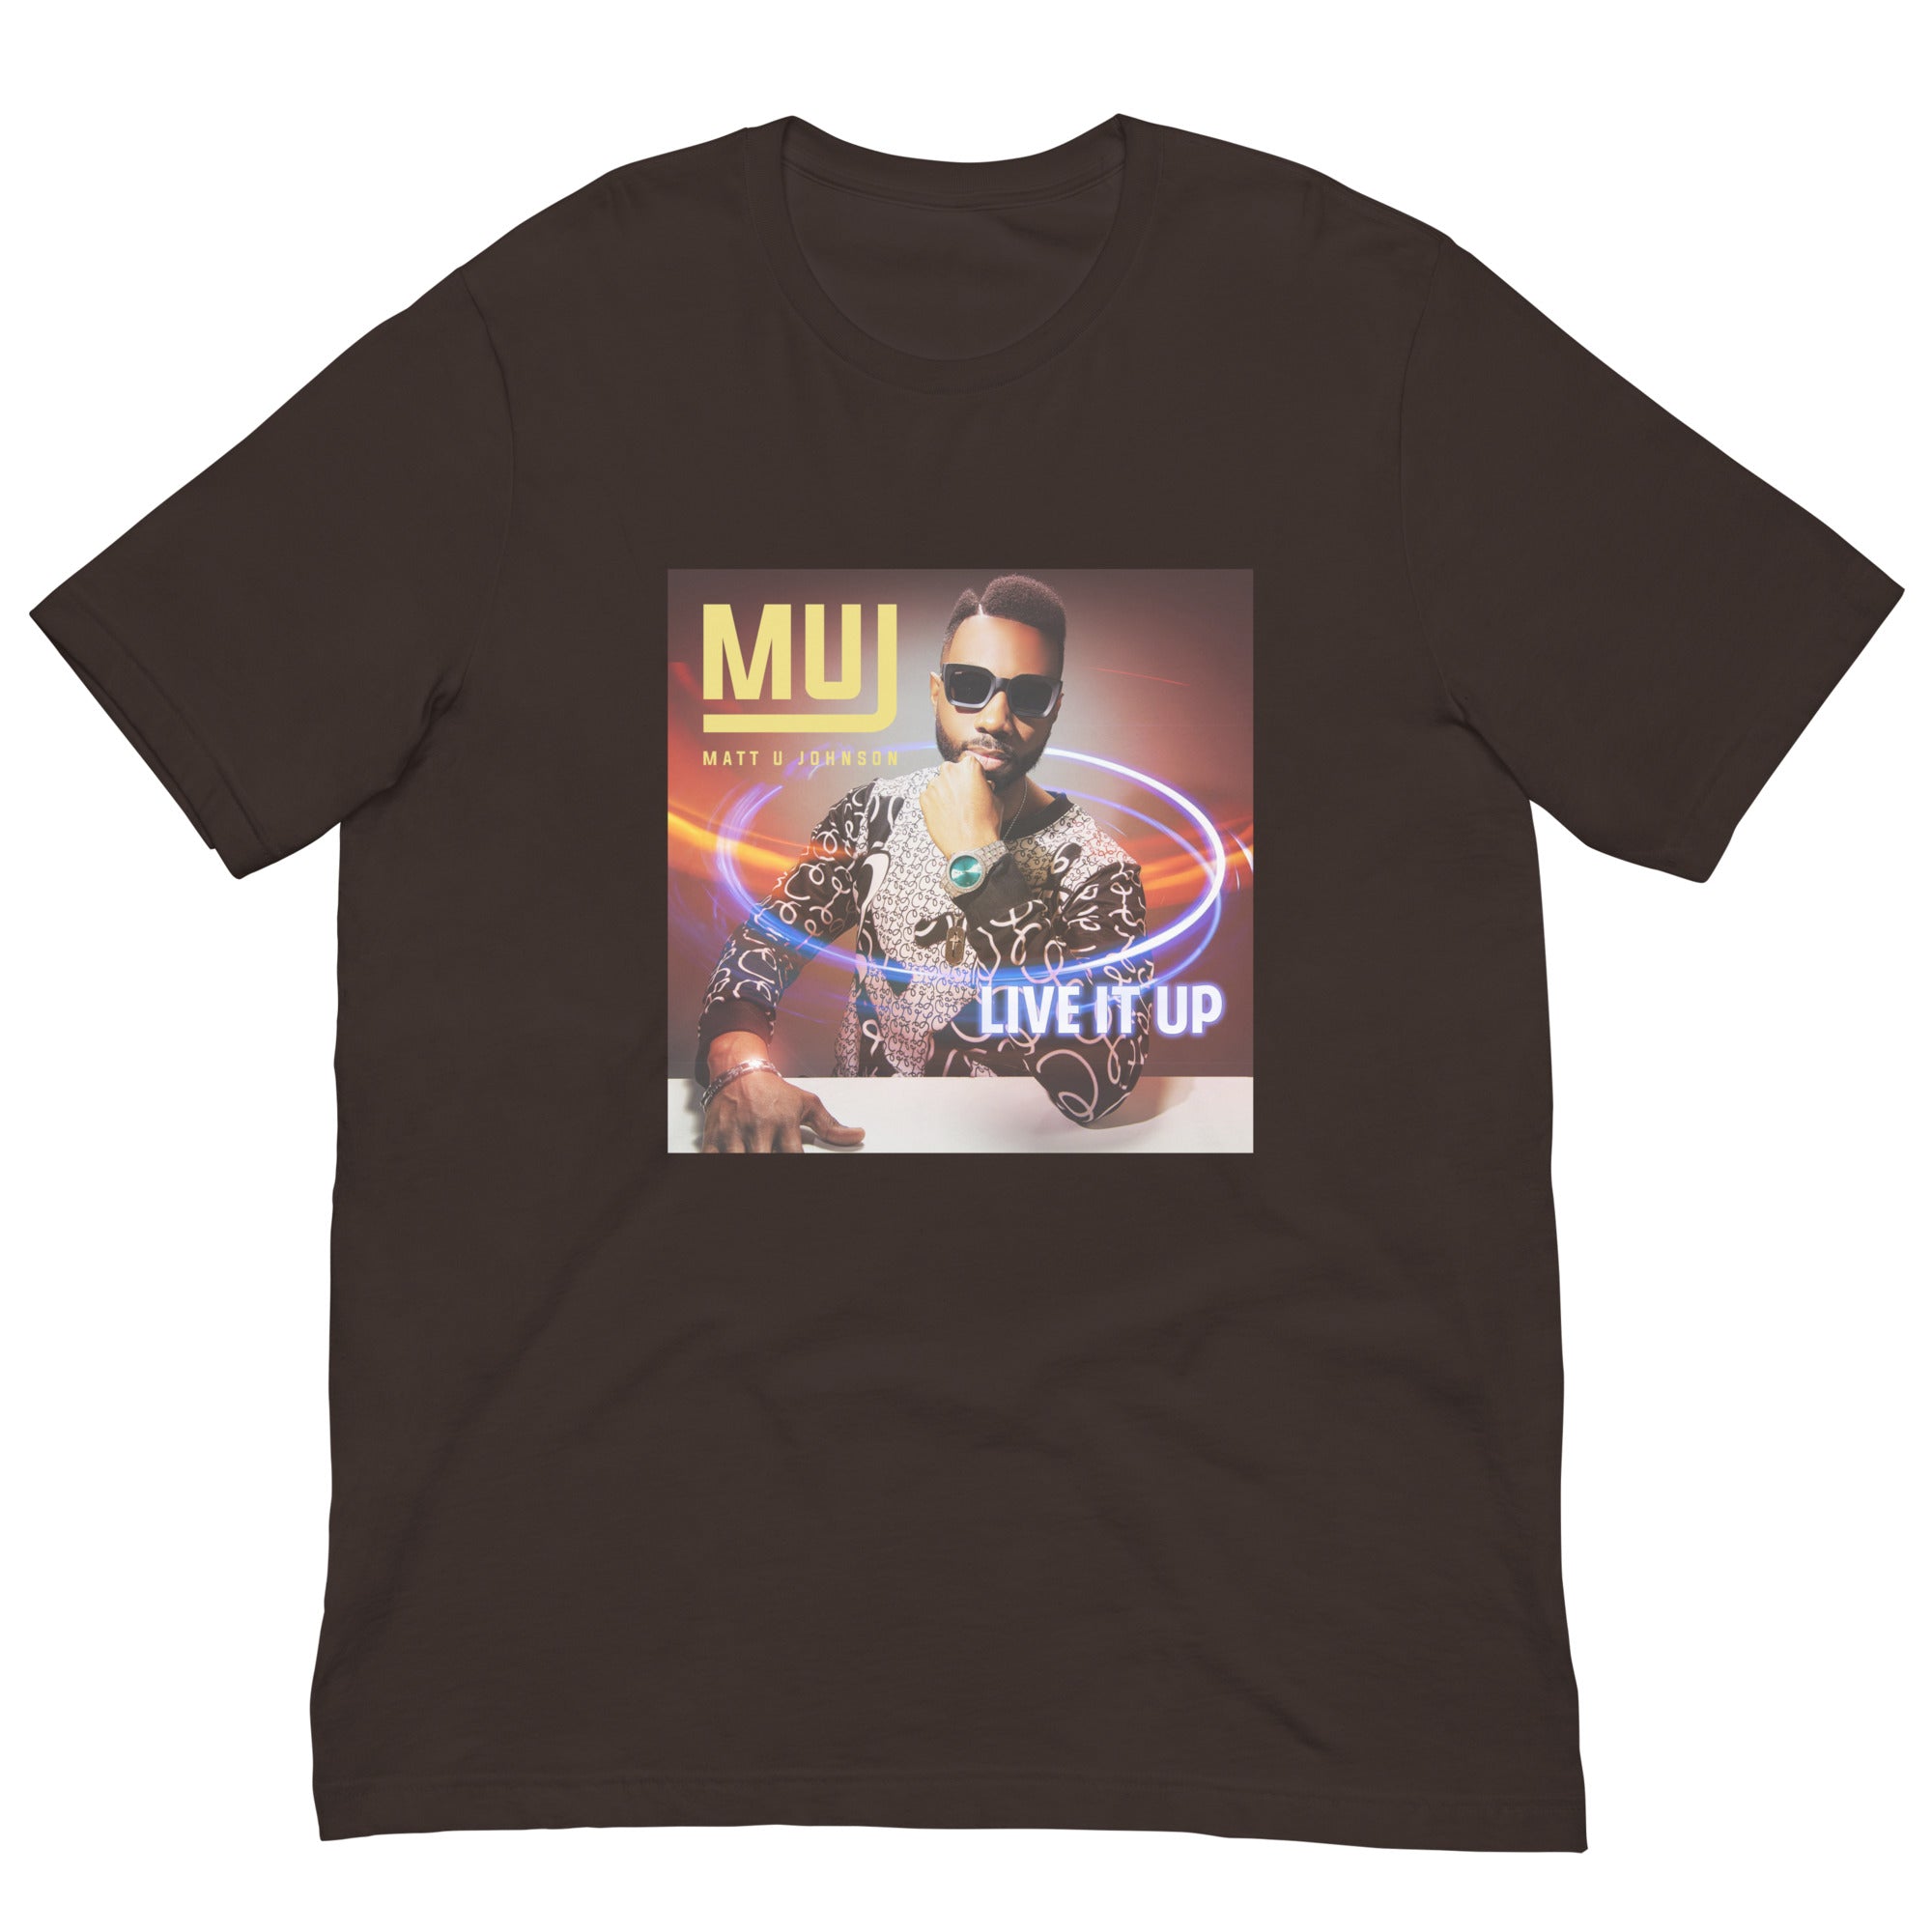 Matt U Johnson -  "Live It Up" - Unisex t-shirt